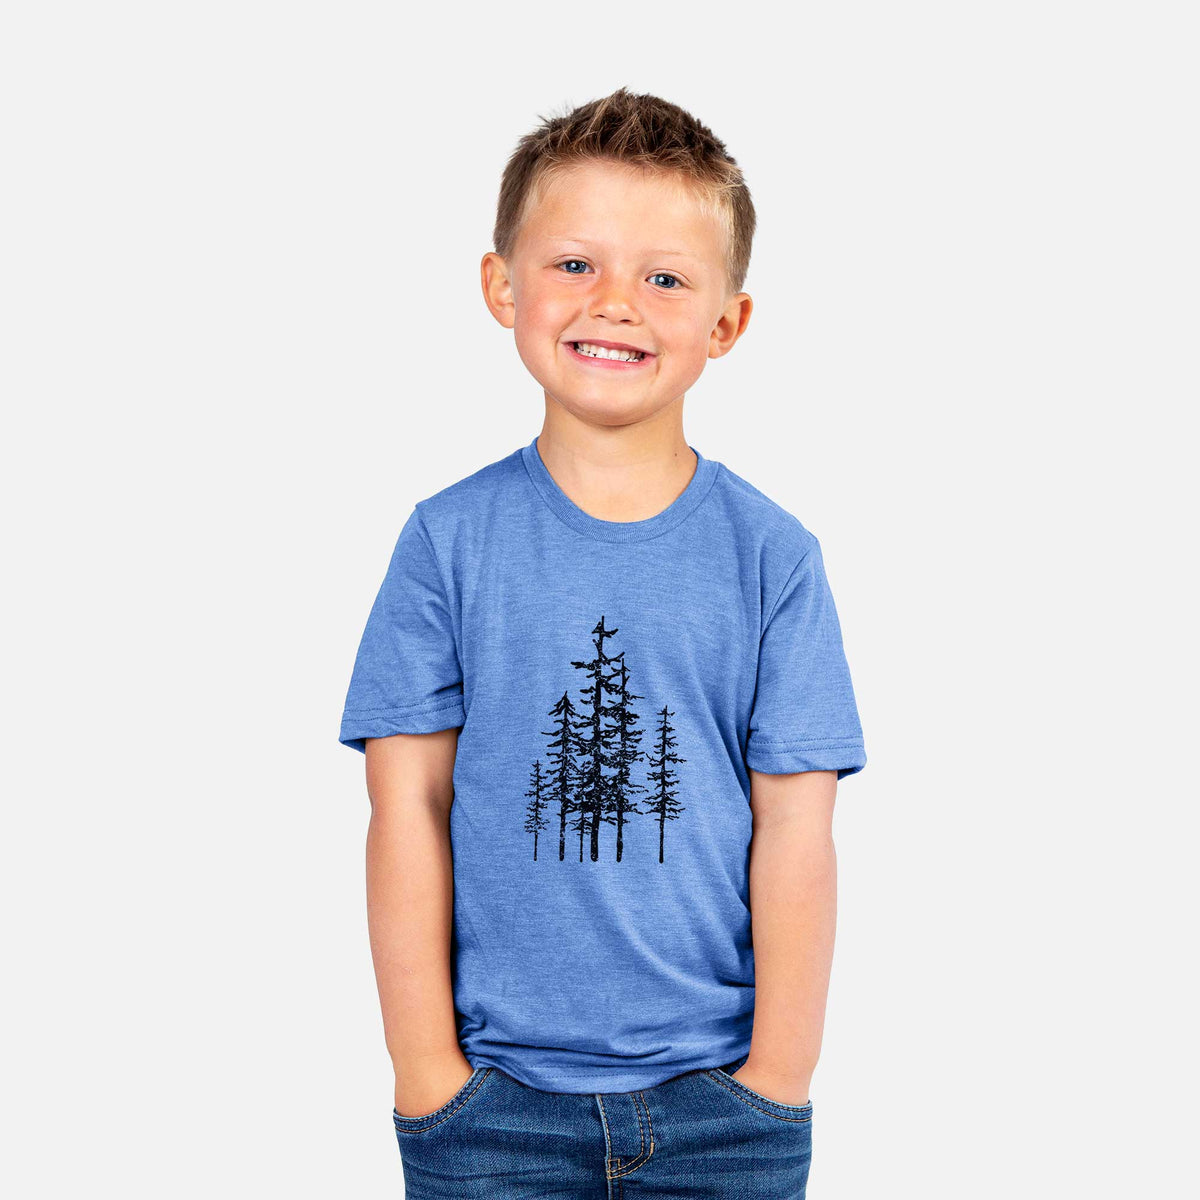 Evergreen Trees - Kids Shirt